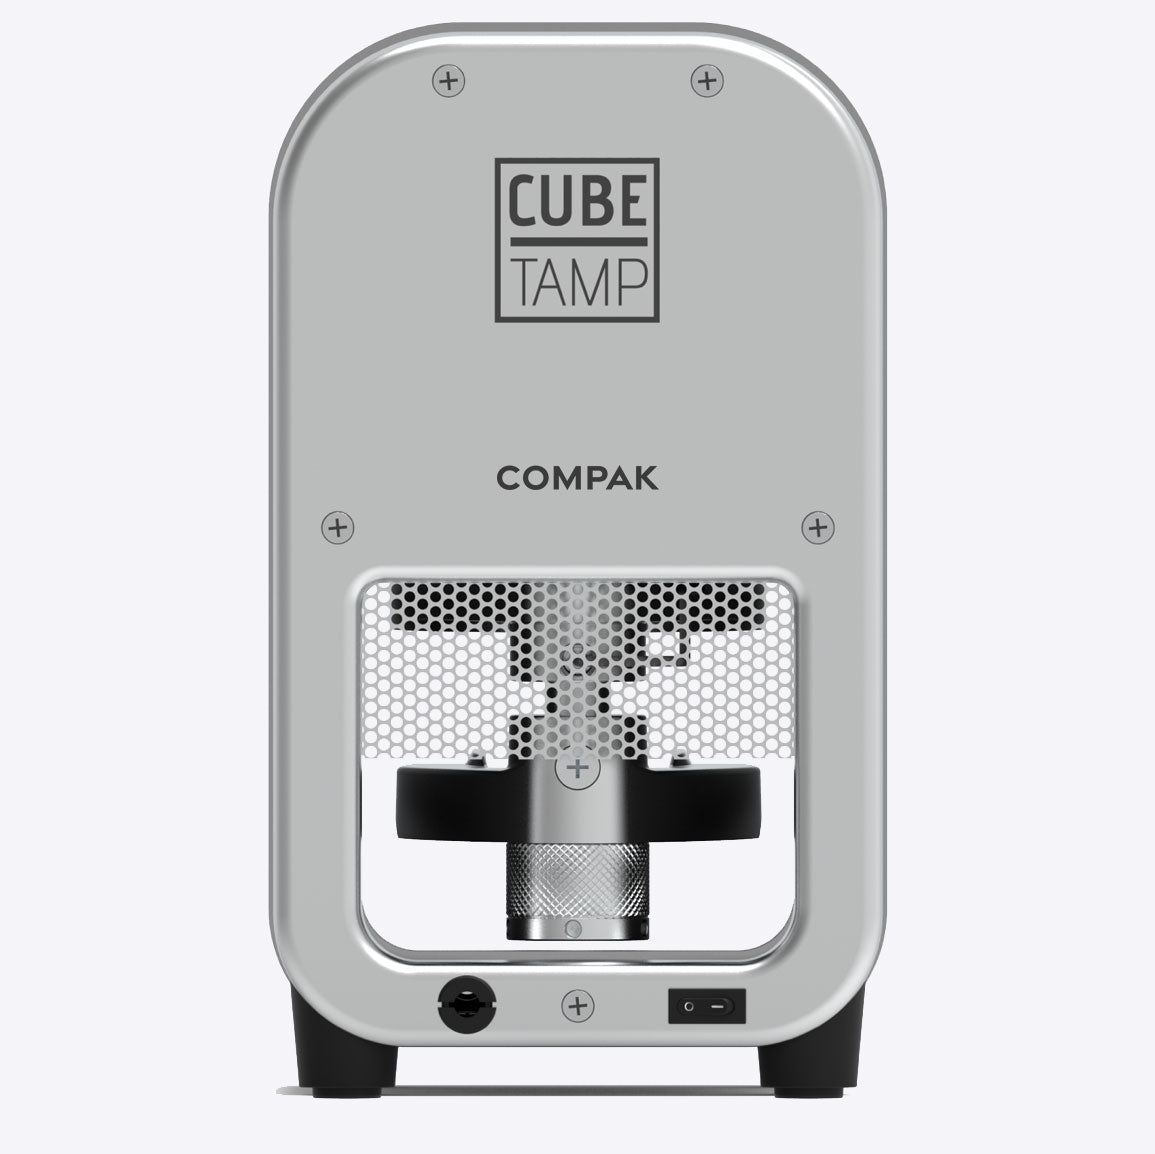 Tamper automático Cube de Compak